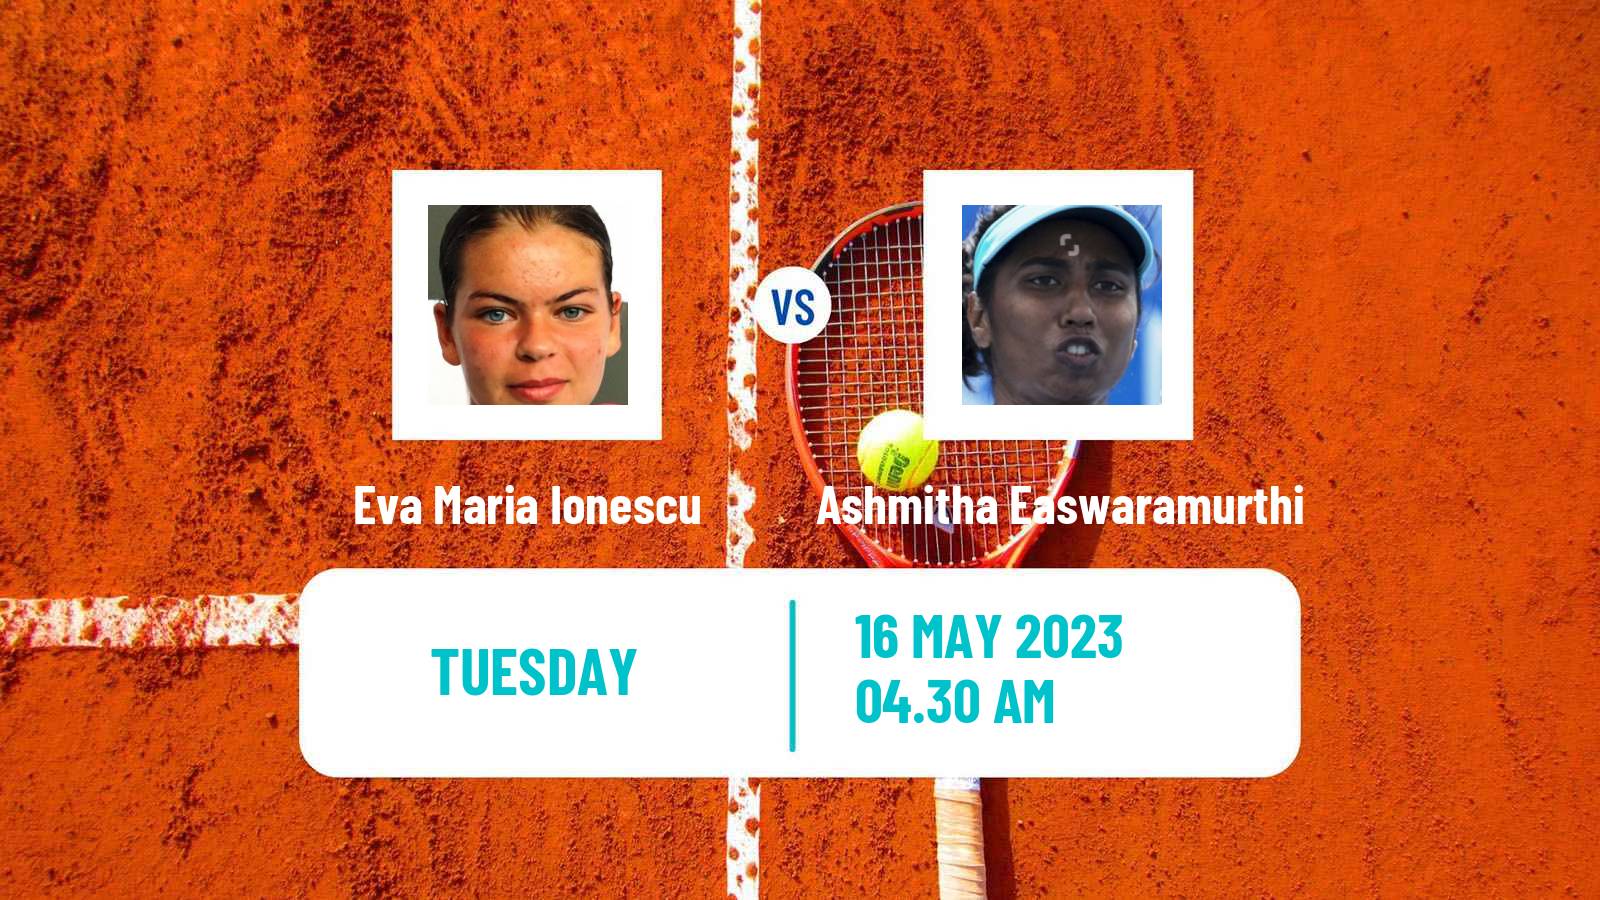 Tennis ITF W25 Kachreti 2 Women Eva Maria Ionescu - Ashmitha Easwaramurthi